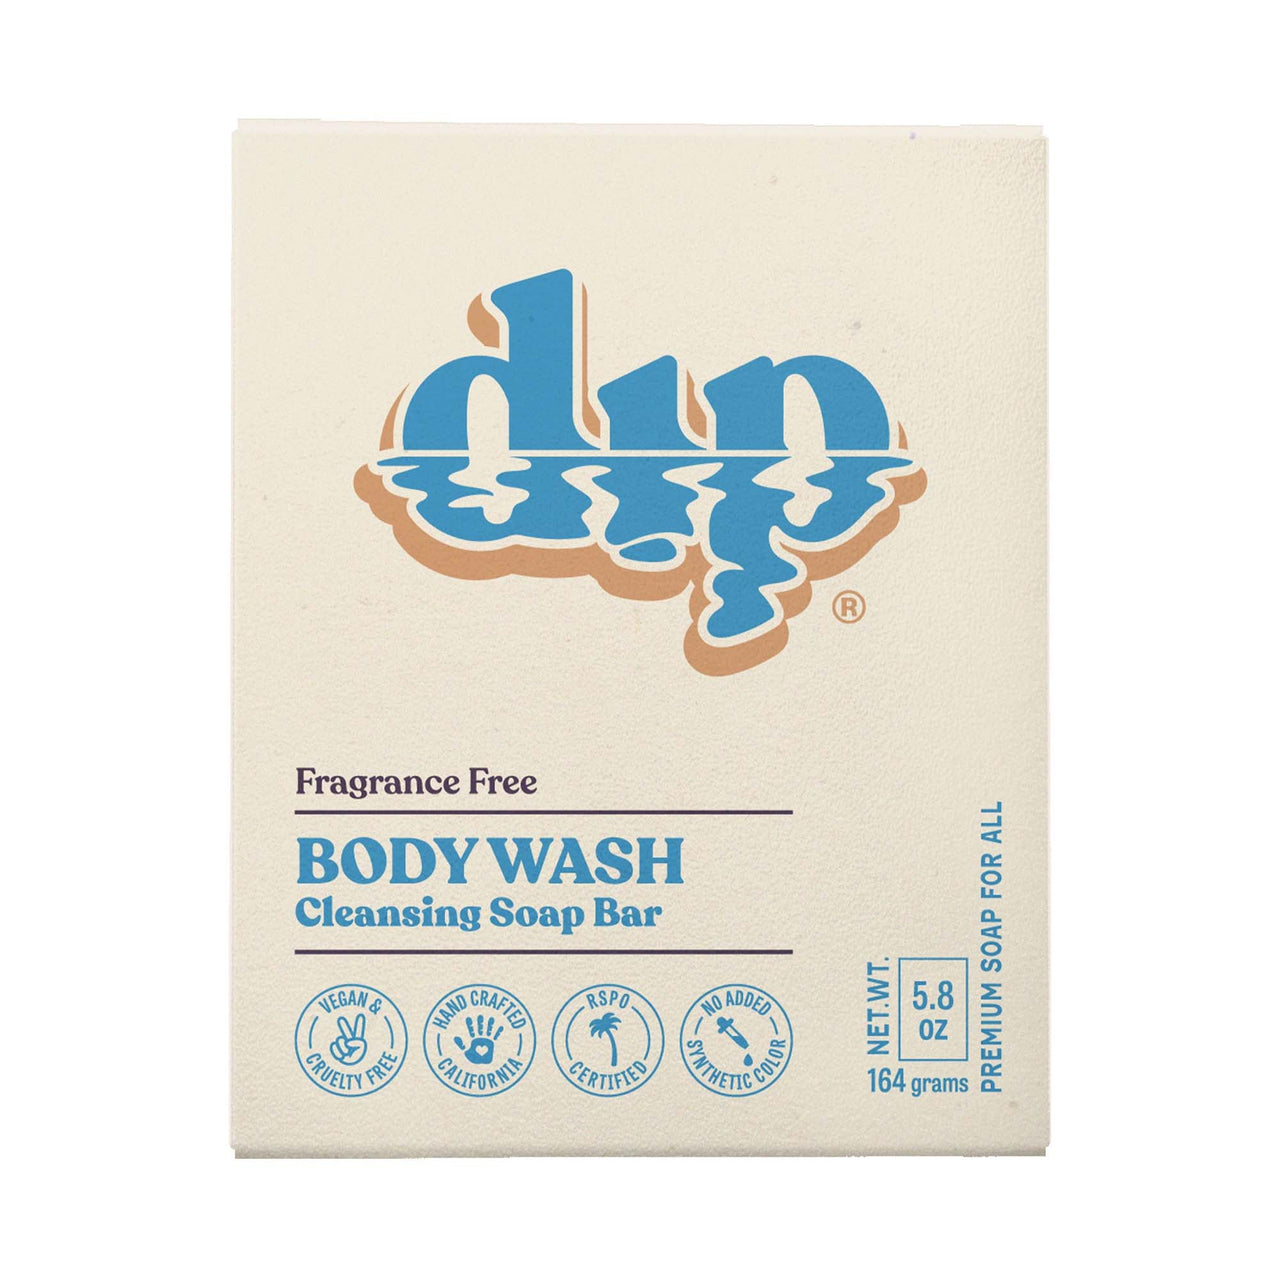 Body Wash Cleansing Soap Bar - Fragrance Free